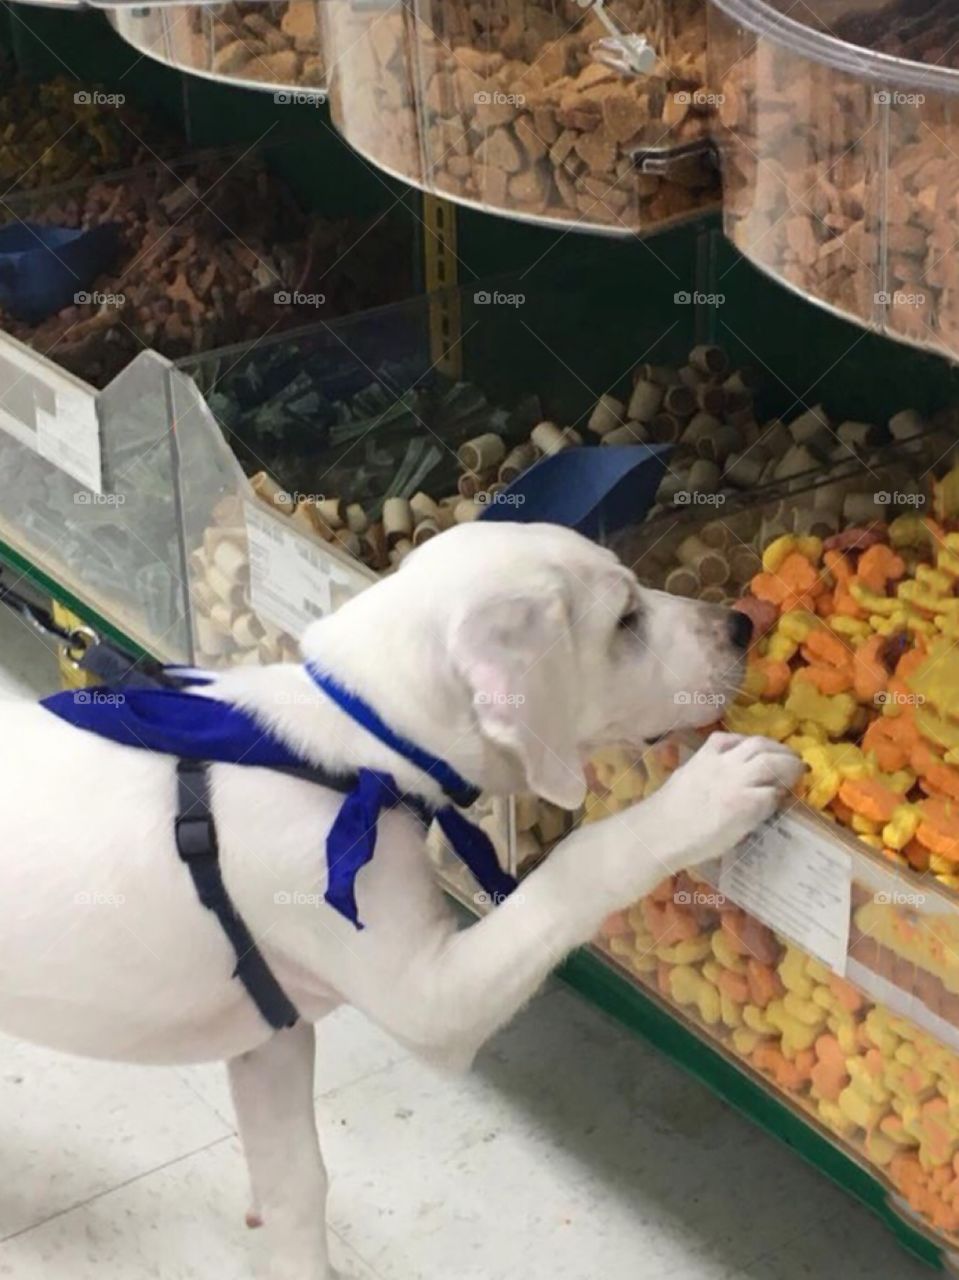 Adorable Labrador Retriever puppy checking out the dog treats in a pet store!  